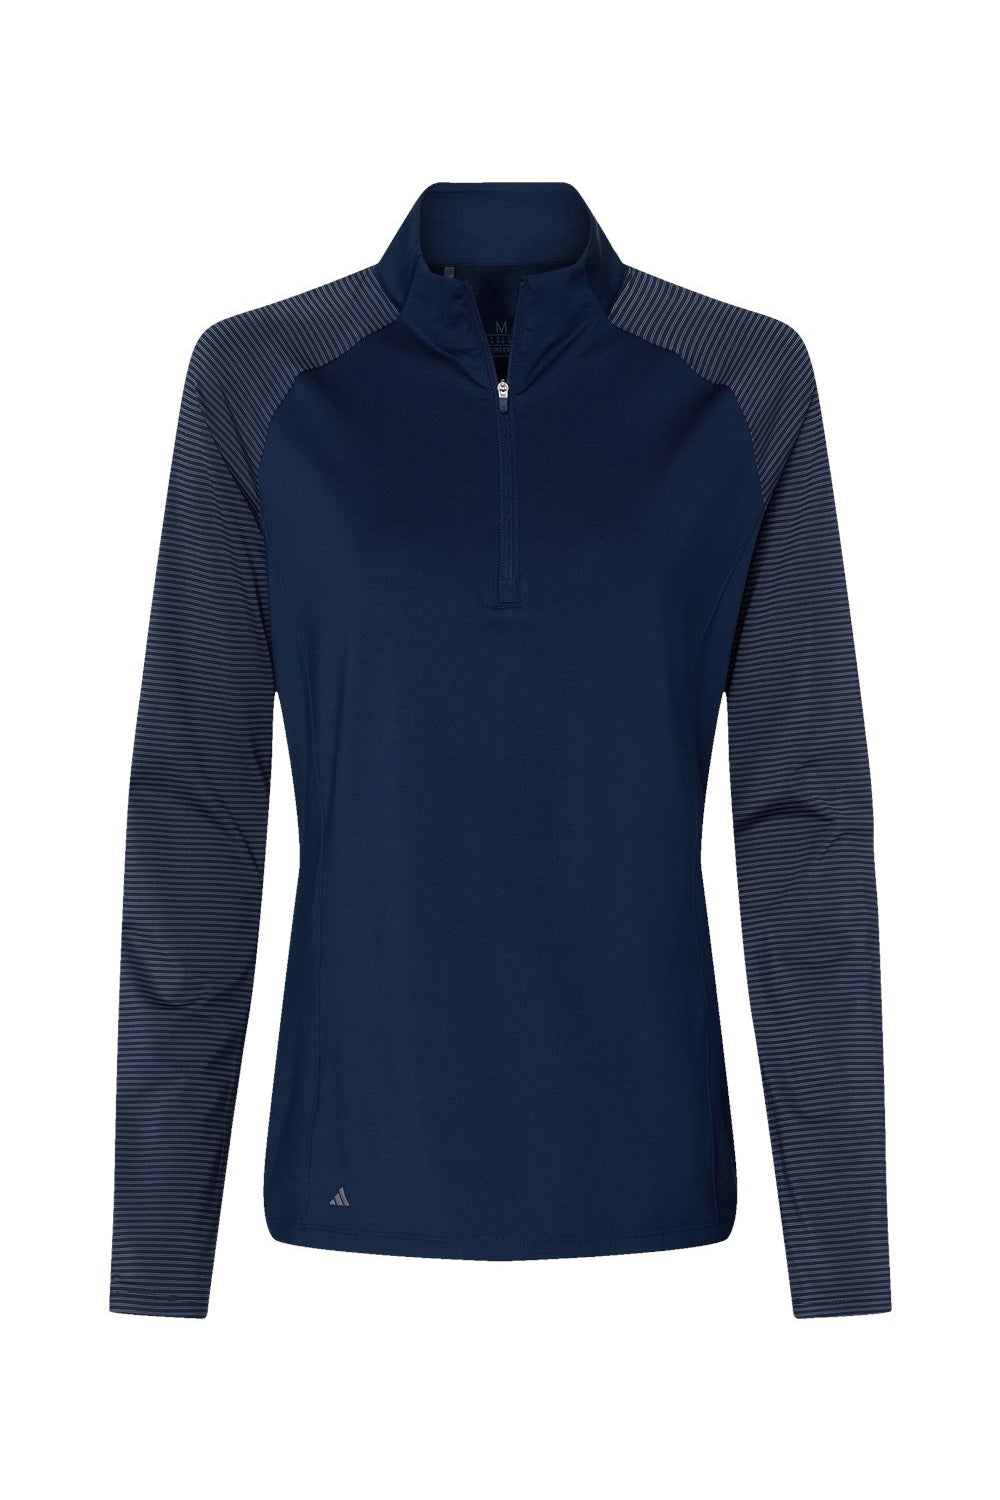 Adidas A521 Womens Stripe Block Moisture Wicking 1/4 Zip Sweatshirt Team Navy Blue Flat Front